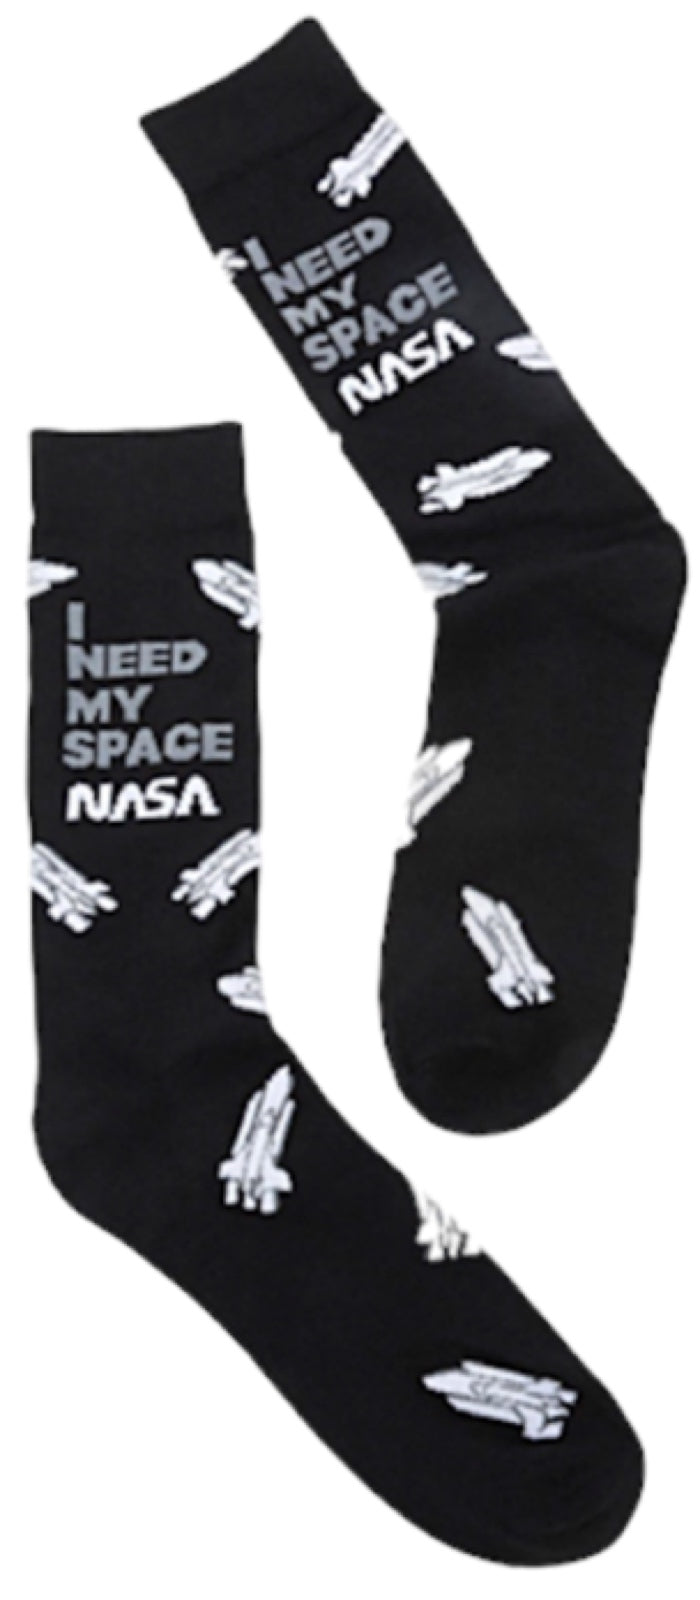 NASA Men’s SPACE SHUTTLE Socks ‘I NEED MY SPACE’